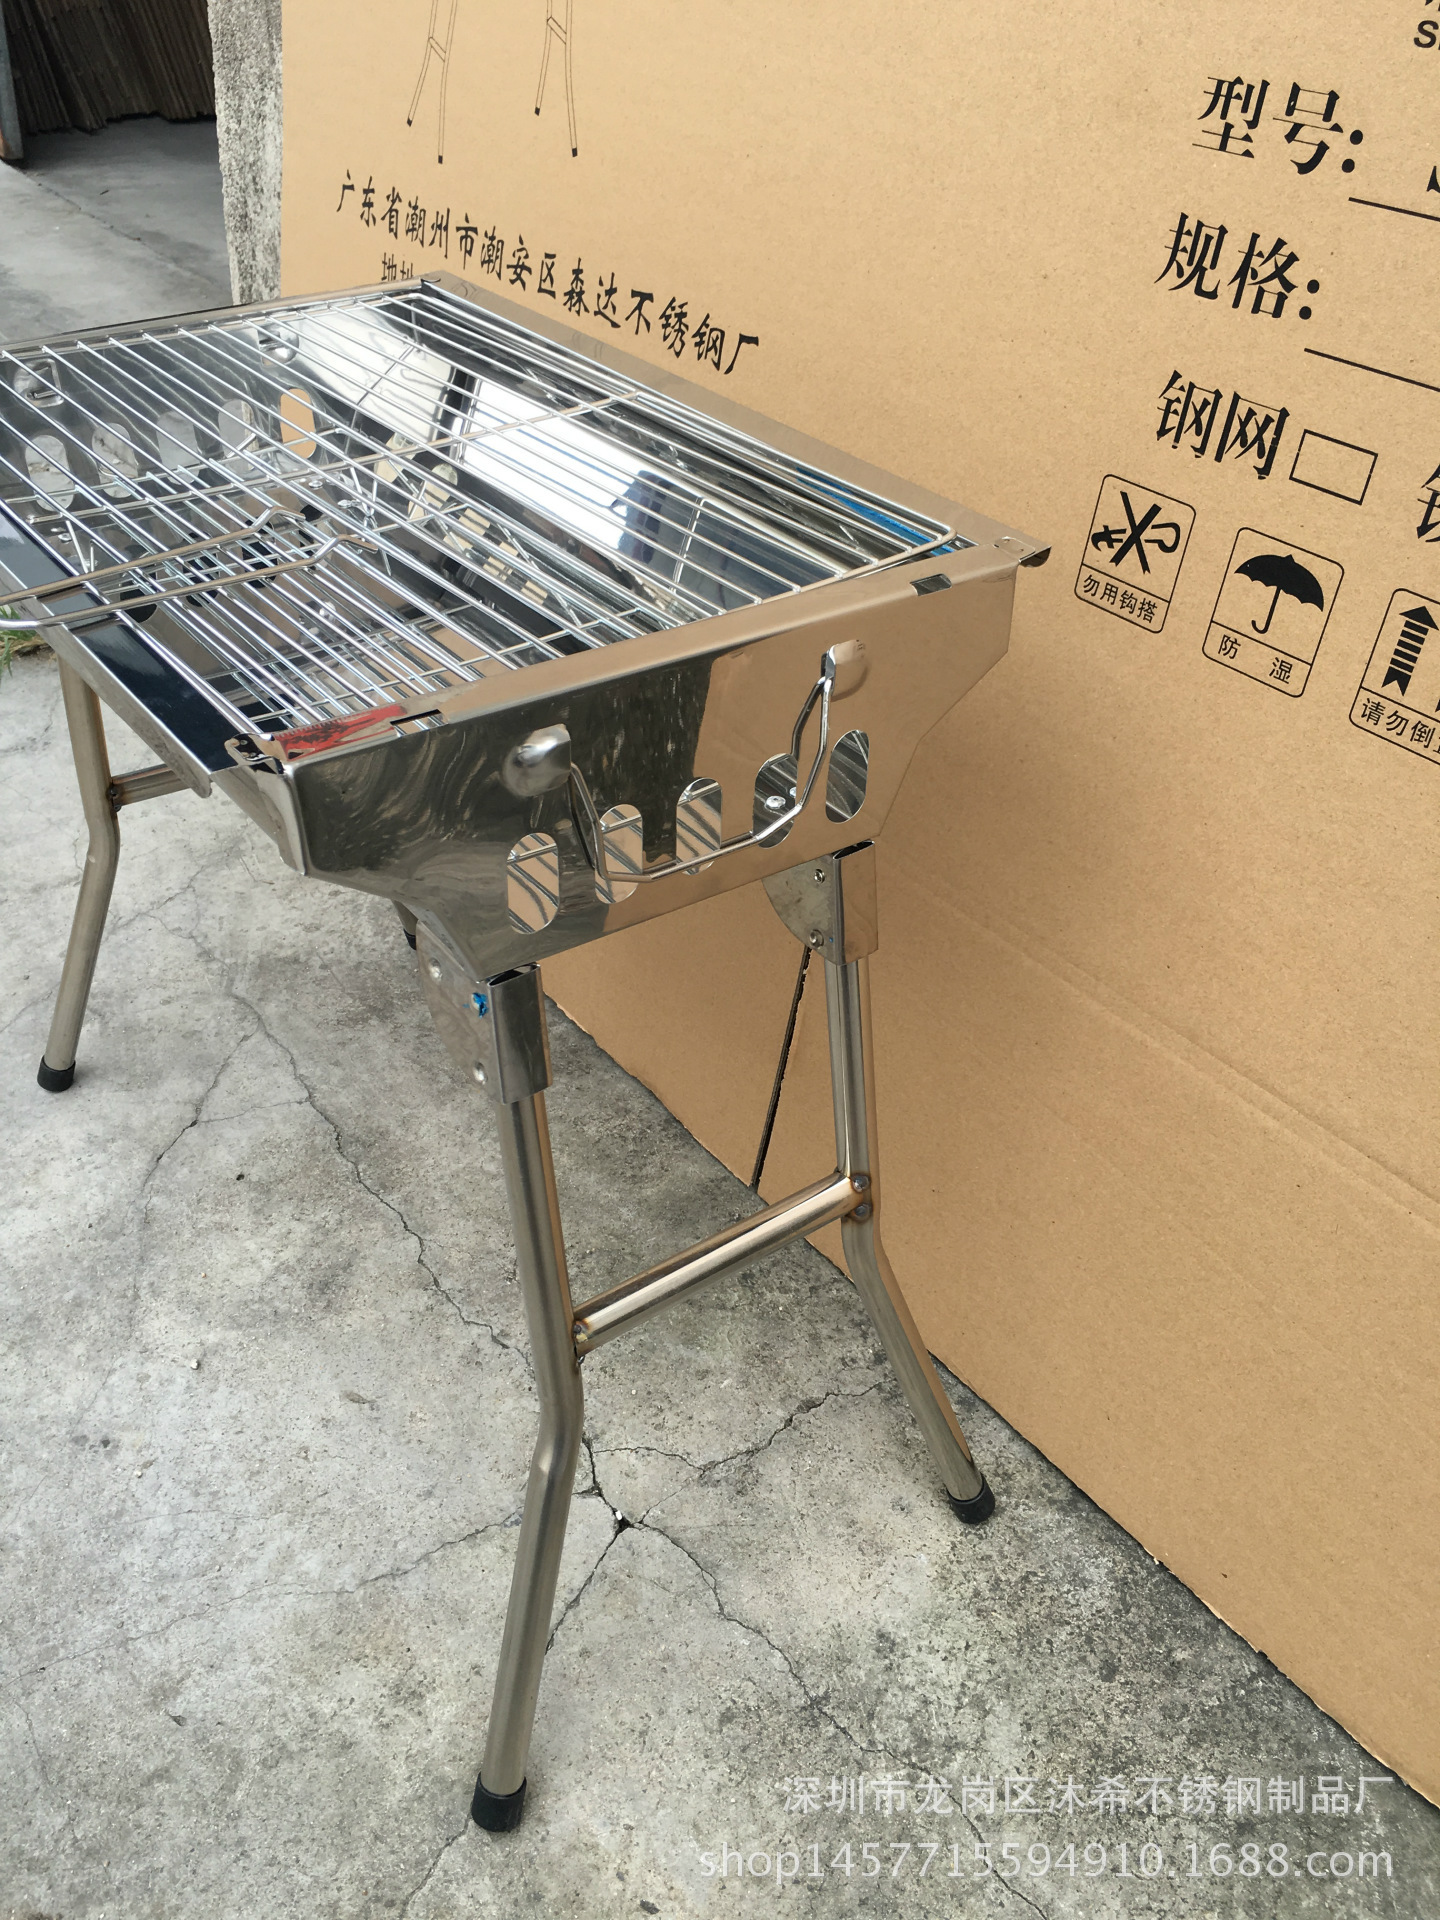 EB-89-台式电热火山石烧烤炉-广州市耐宝万西厨设备制造有限公司